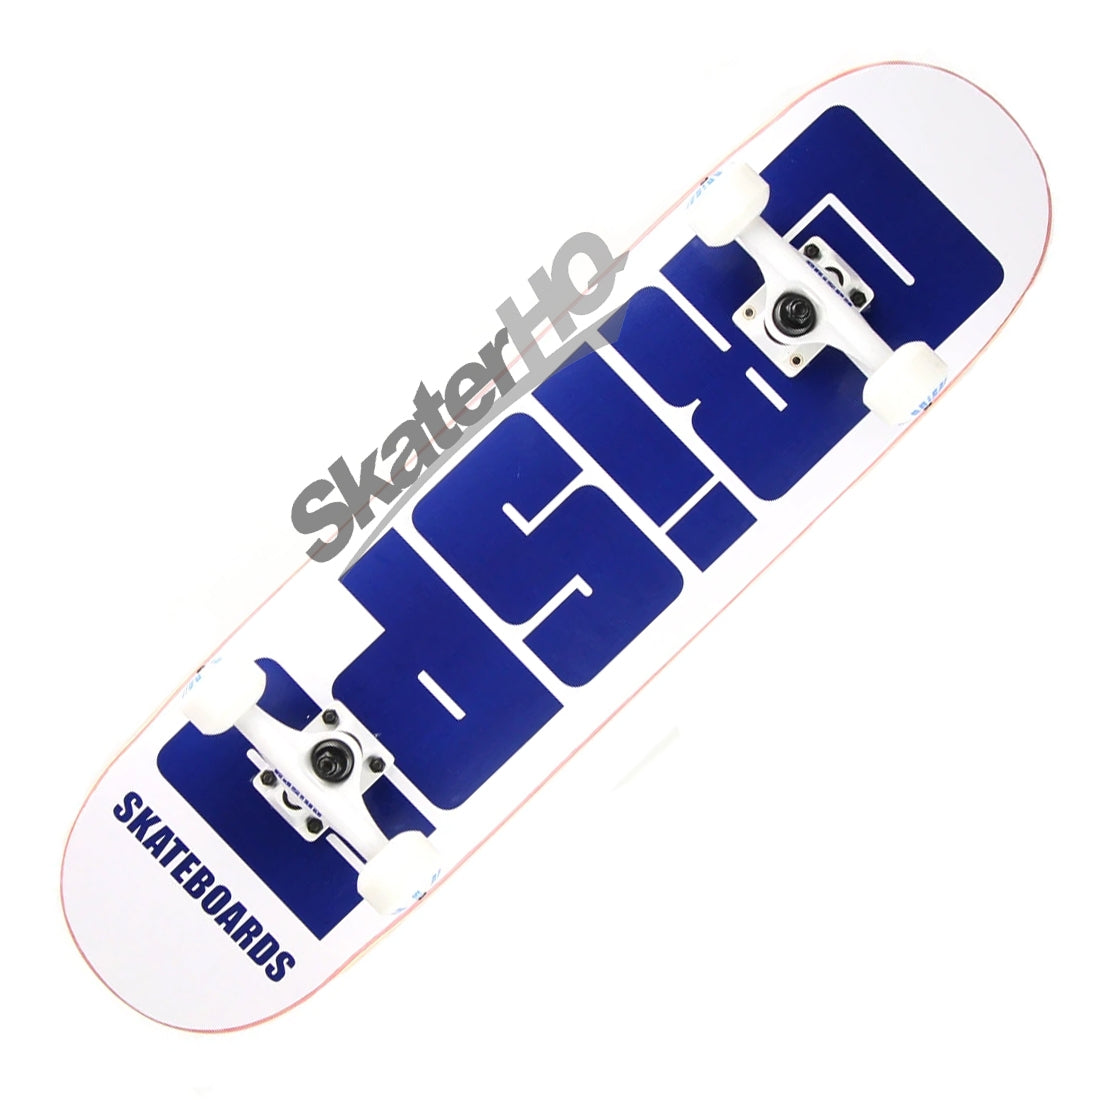 Crispy Advanced 7.75 Complete - White/Blue Skateboard Completes Modern Street